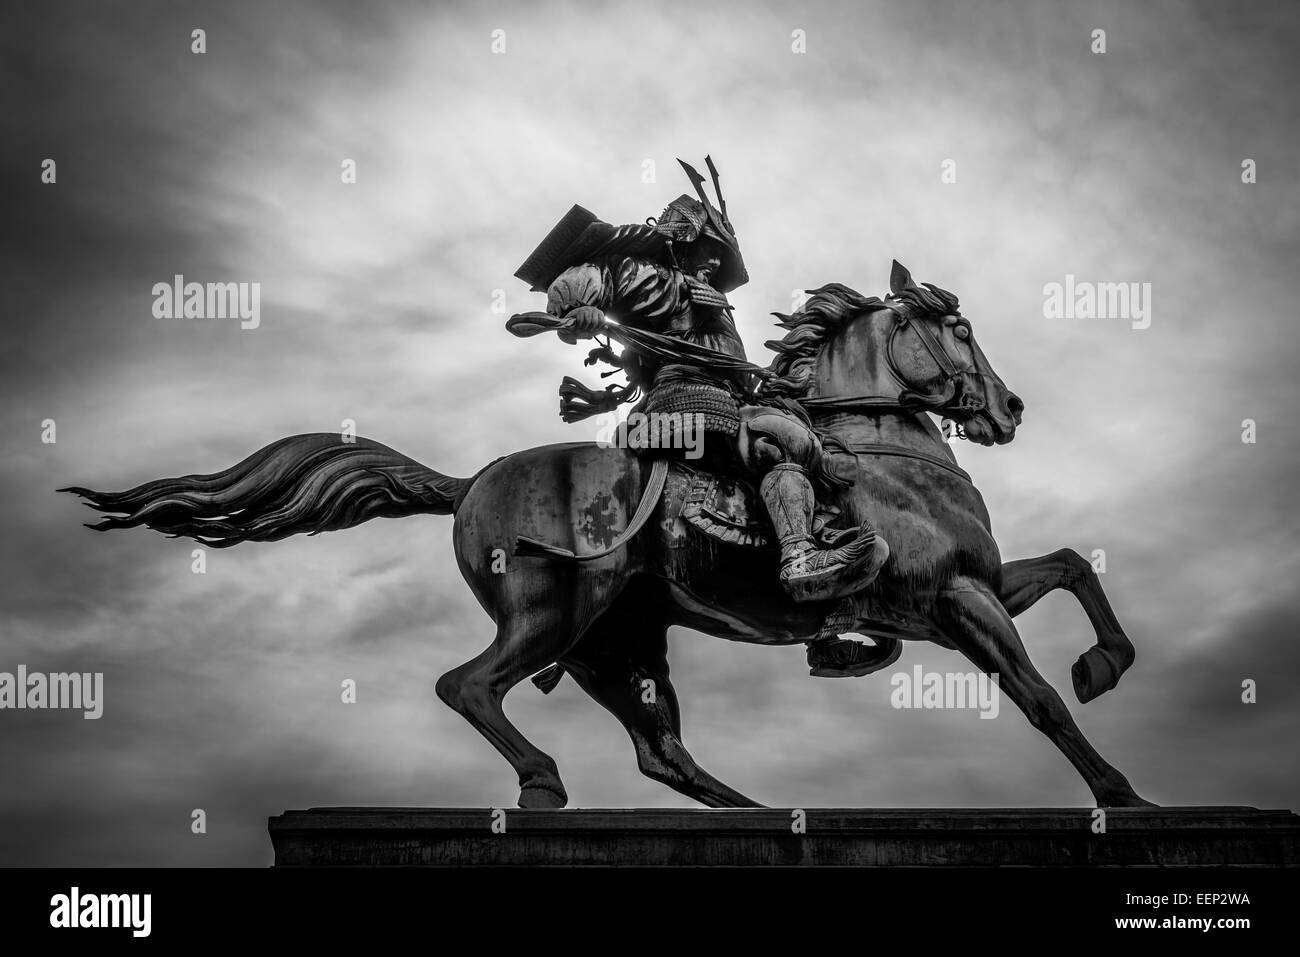 Black and white of a samurai on horseback. Stock Photo